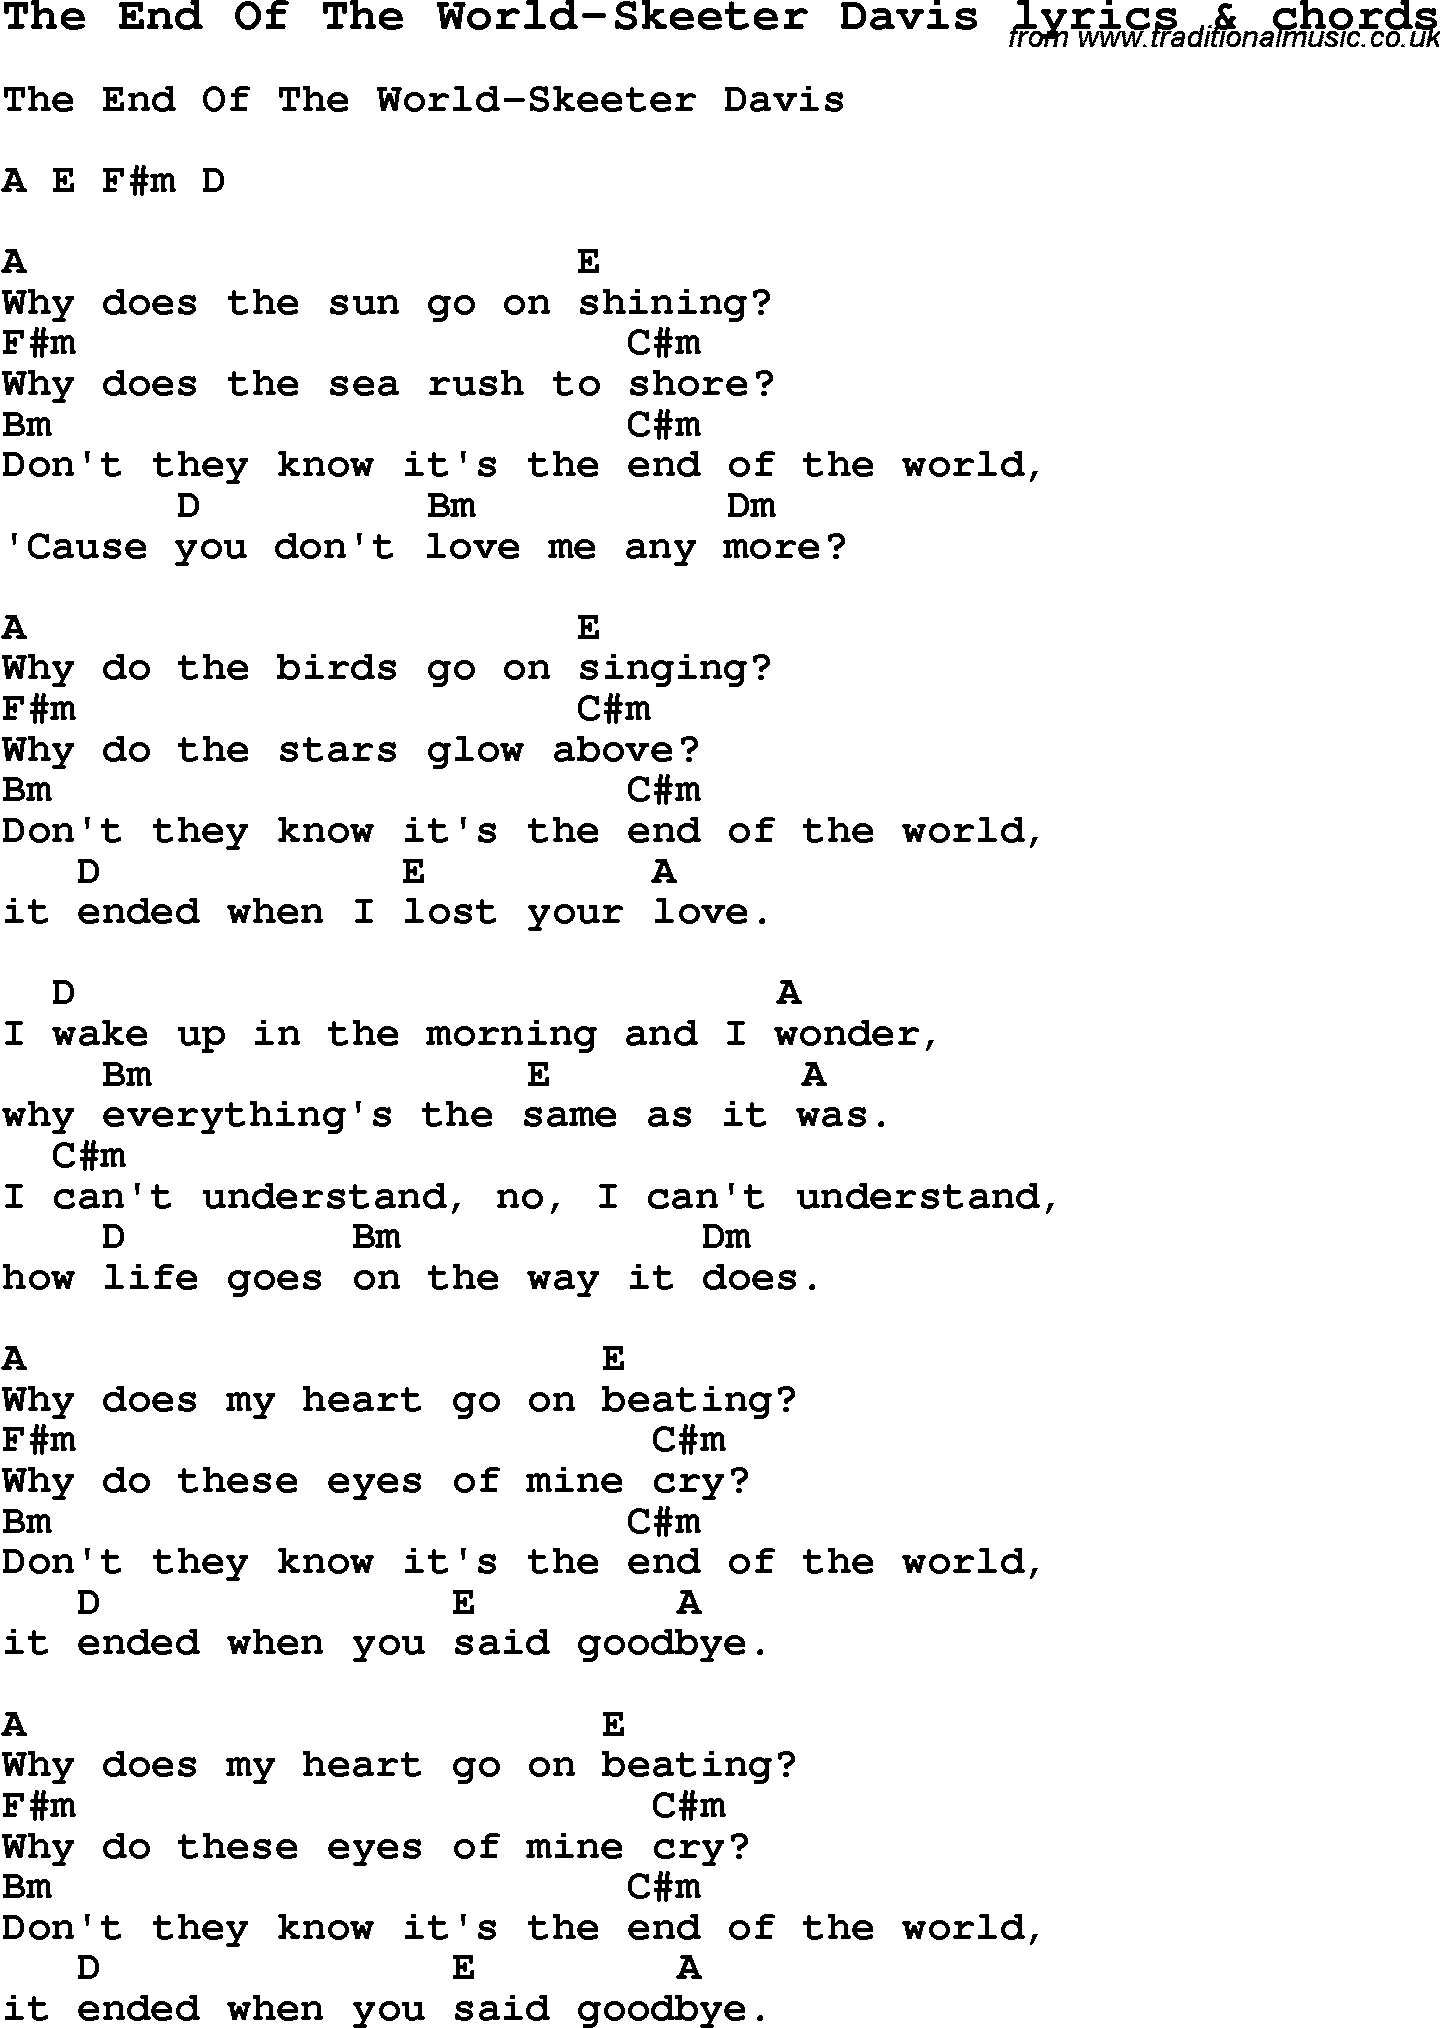 part of this world lyrics